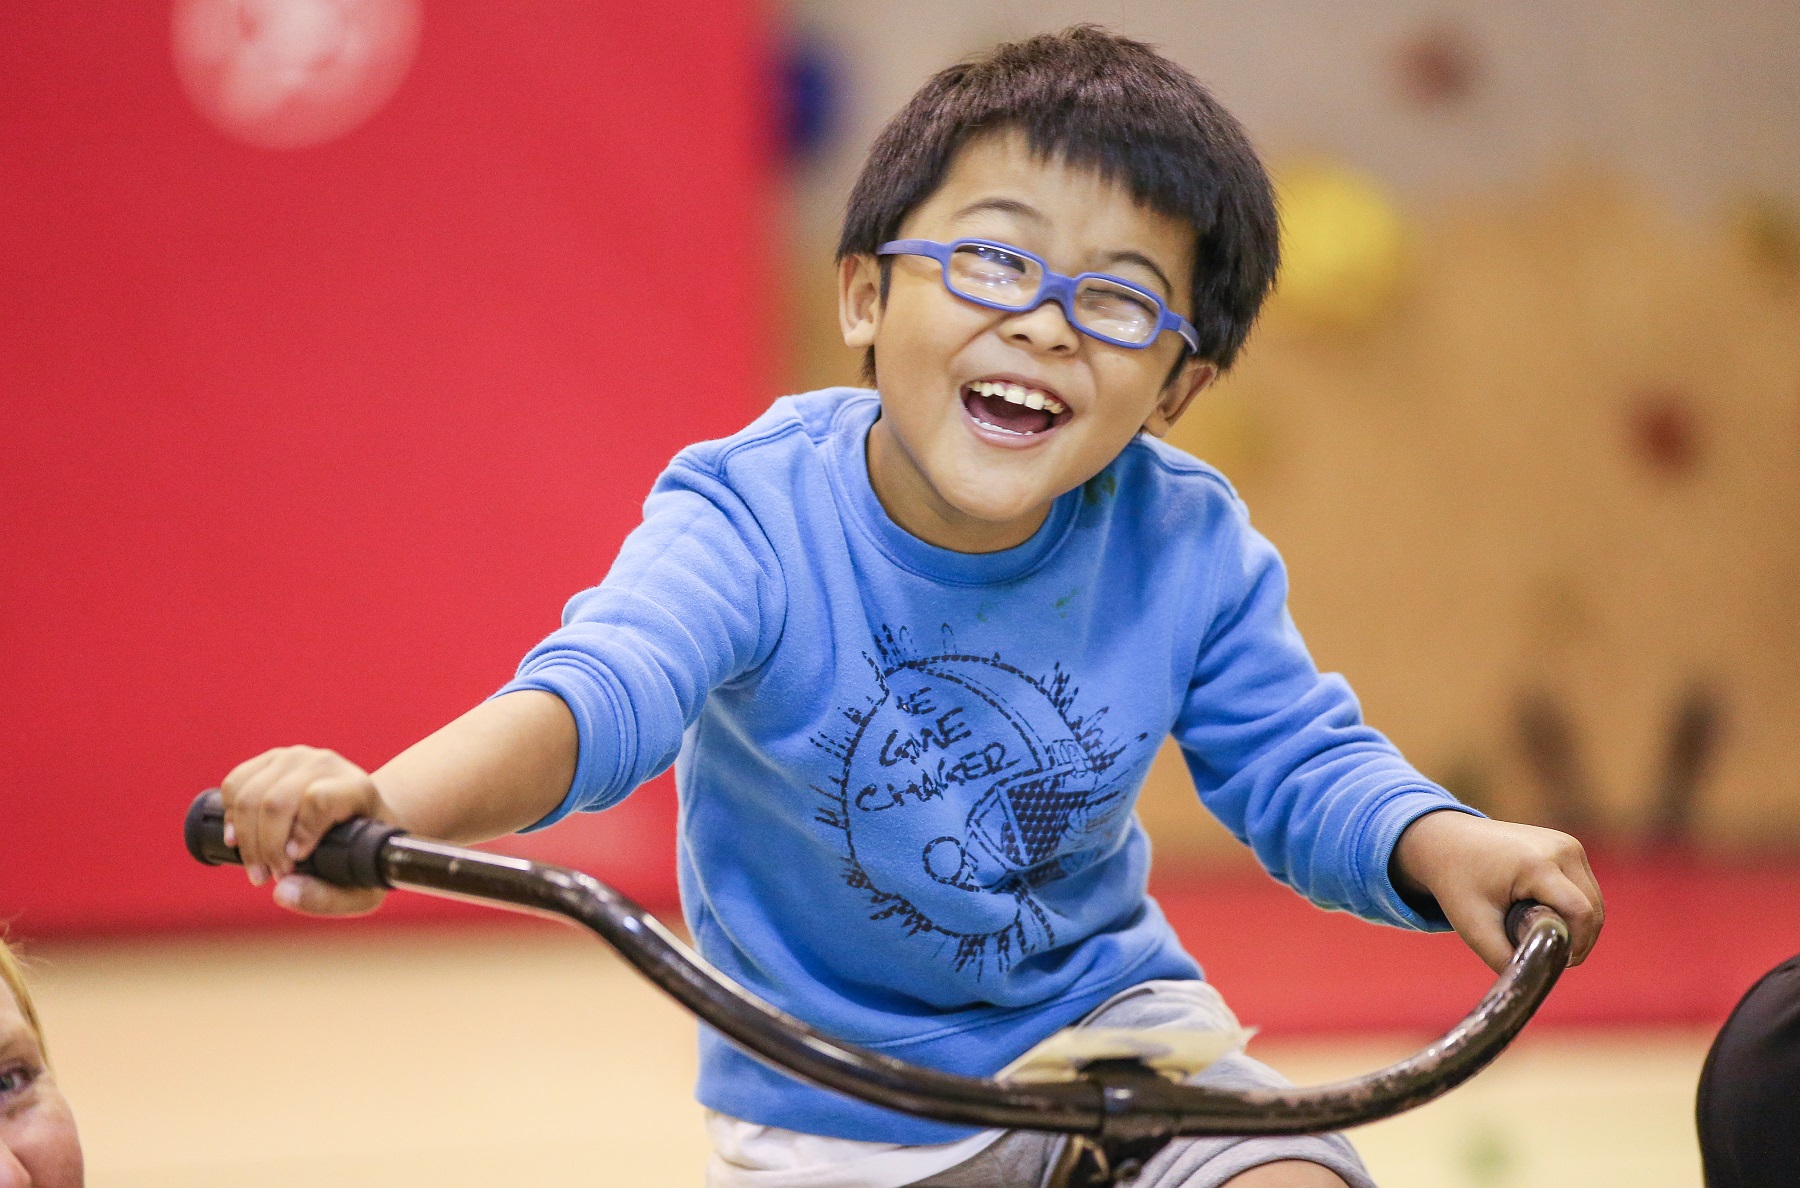 a smiling boy on a bike